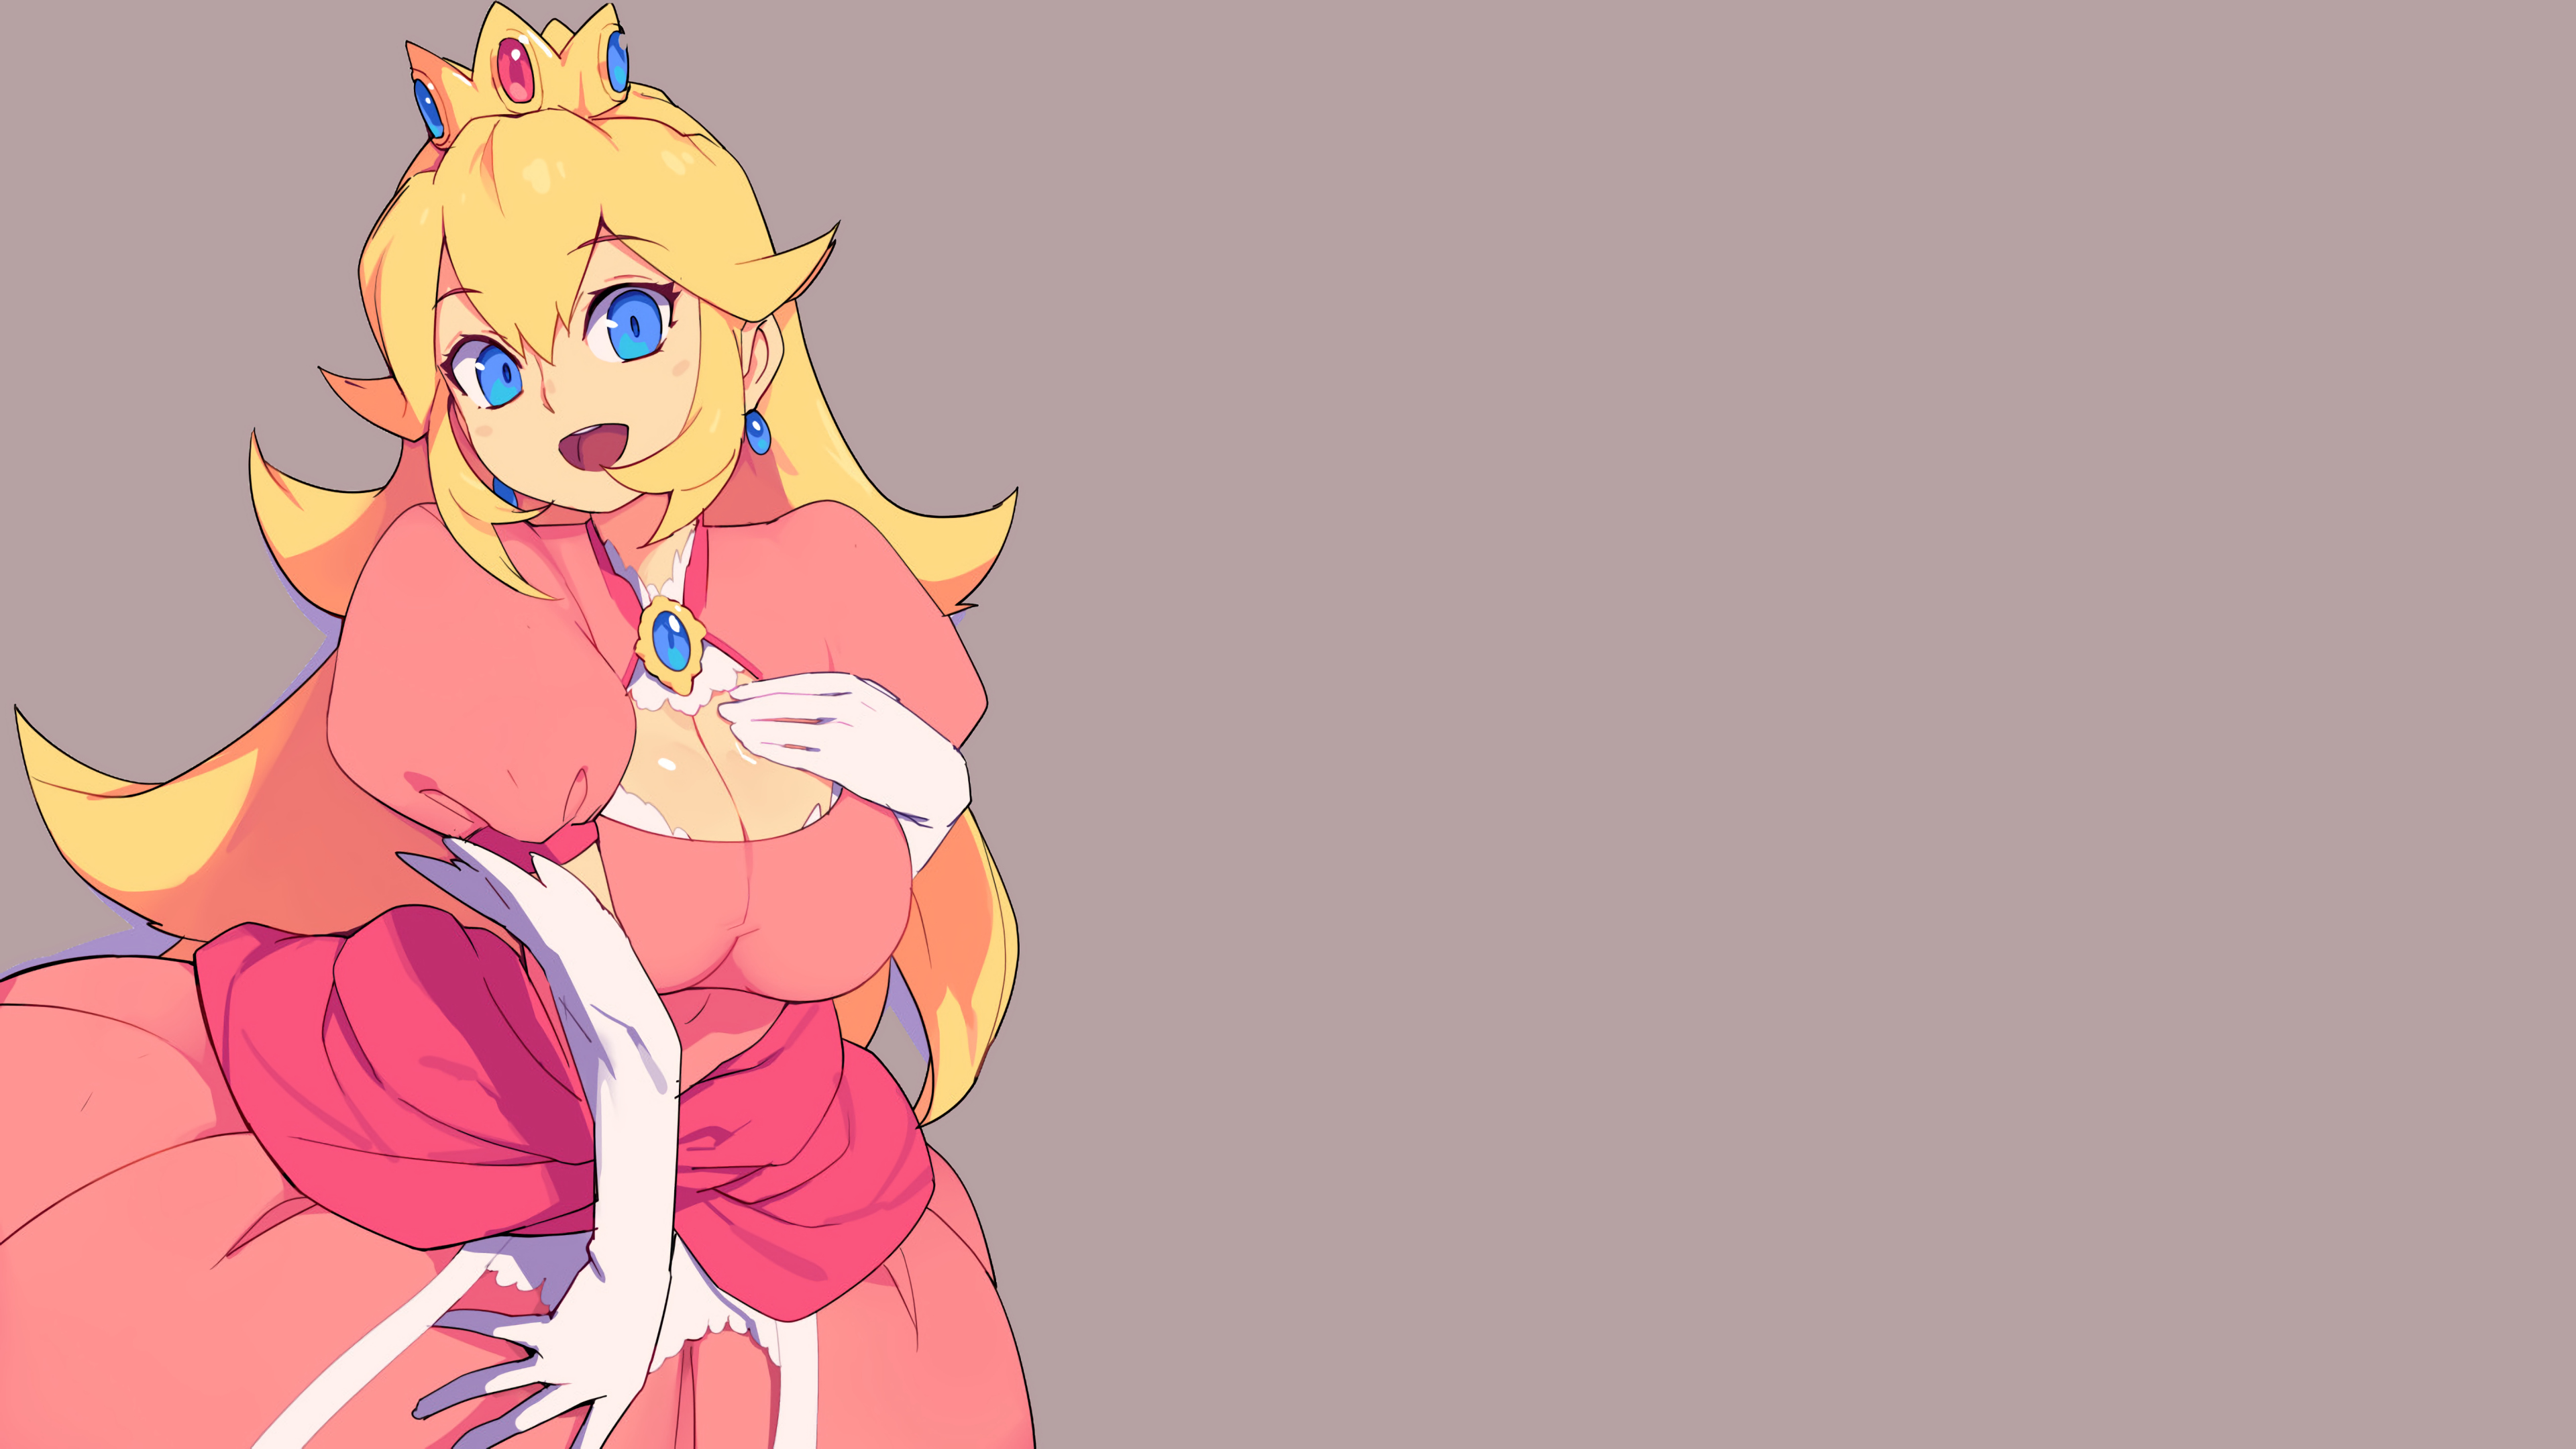 Video Games Super Mario Super Mario Bros Super Smash Brothers Princess Peach Pink Dress Crown Bridal 3840x2160